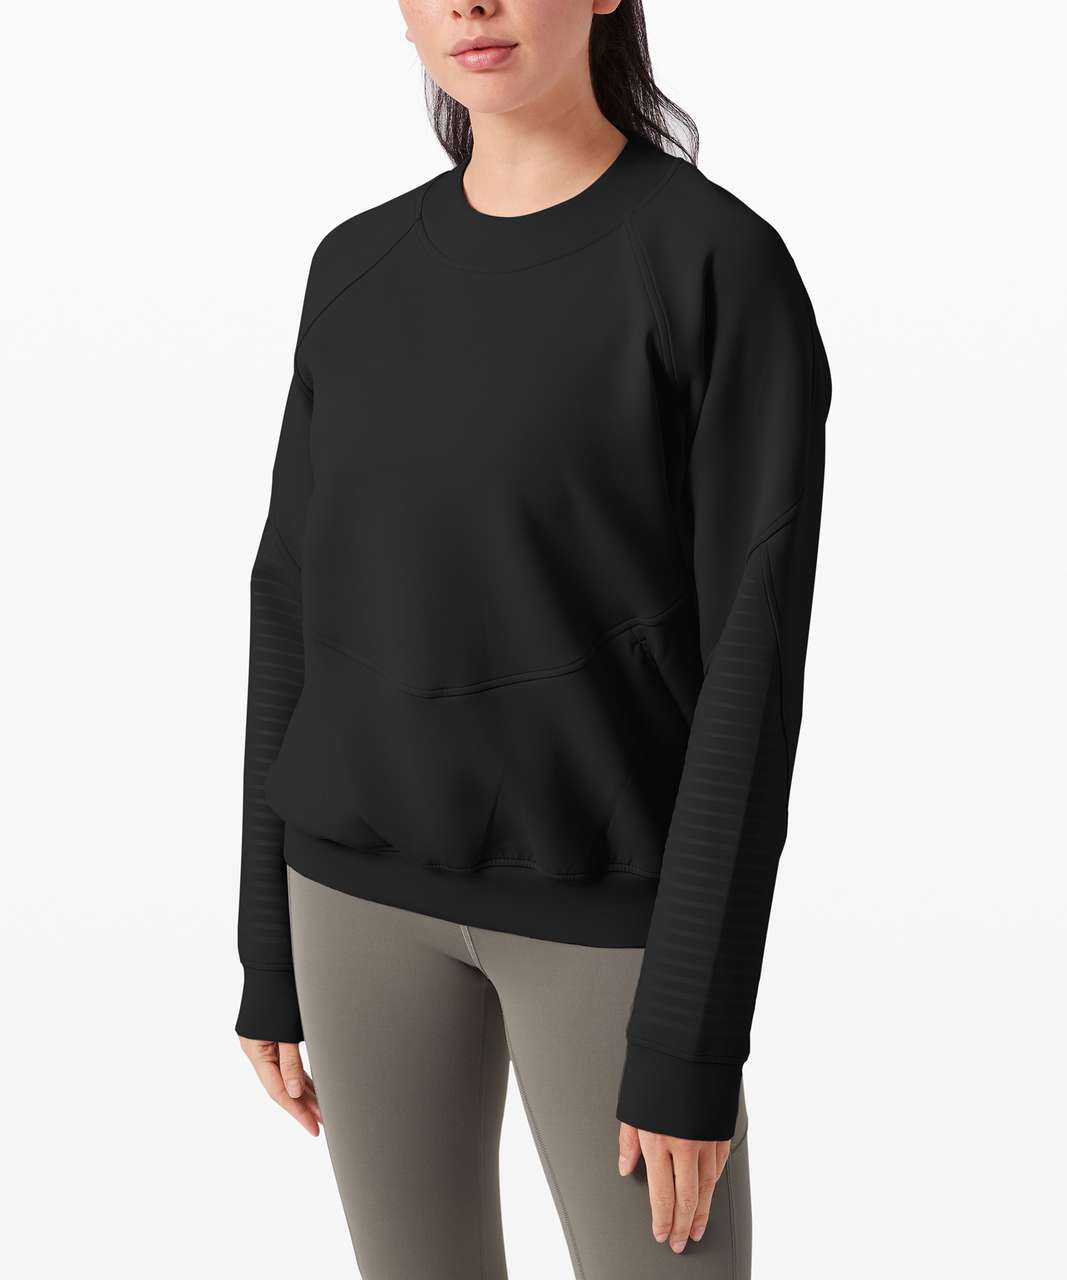 Lululemon Athletica Color Block Solid Black Sweatshirt Size 12